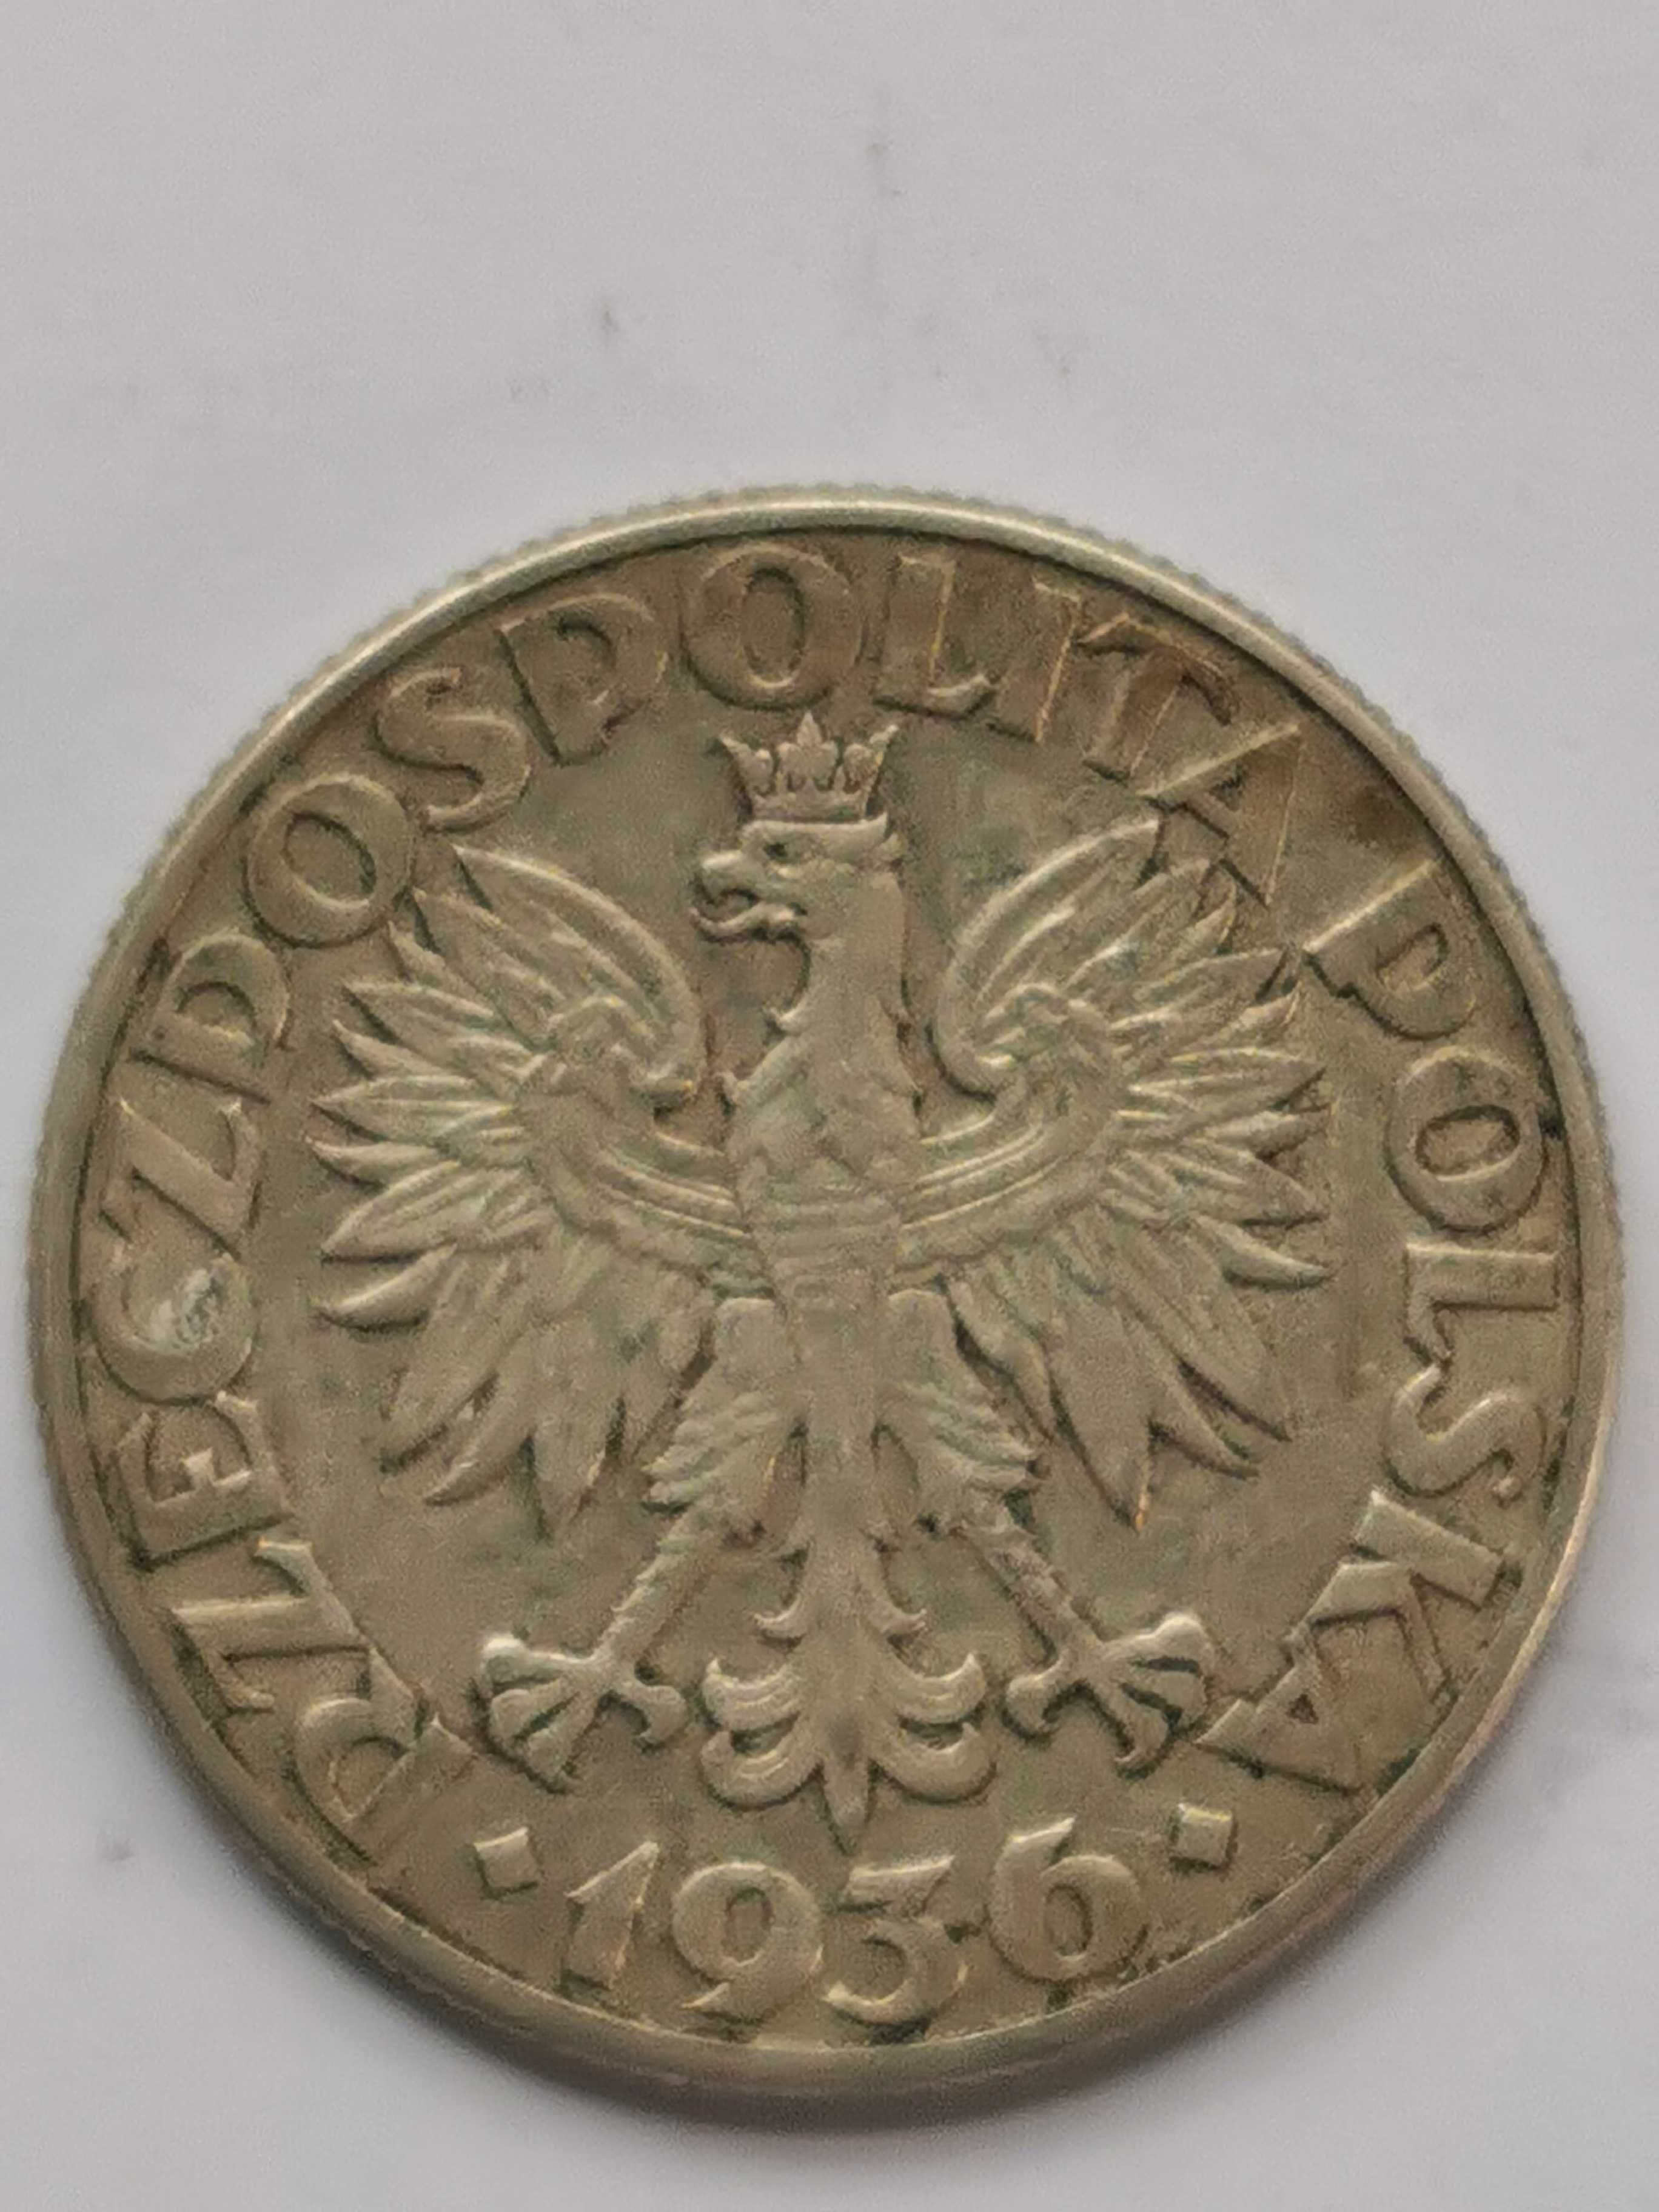 Moneta 2 zł 1936r. - Żaglówka